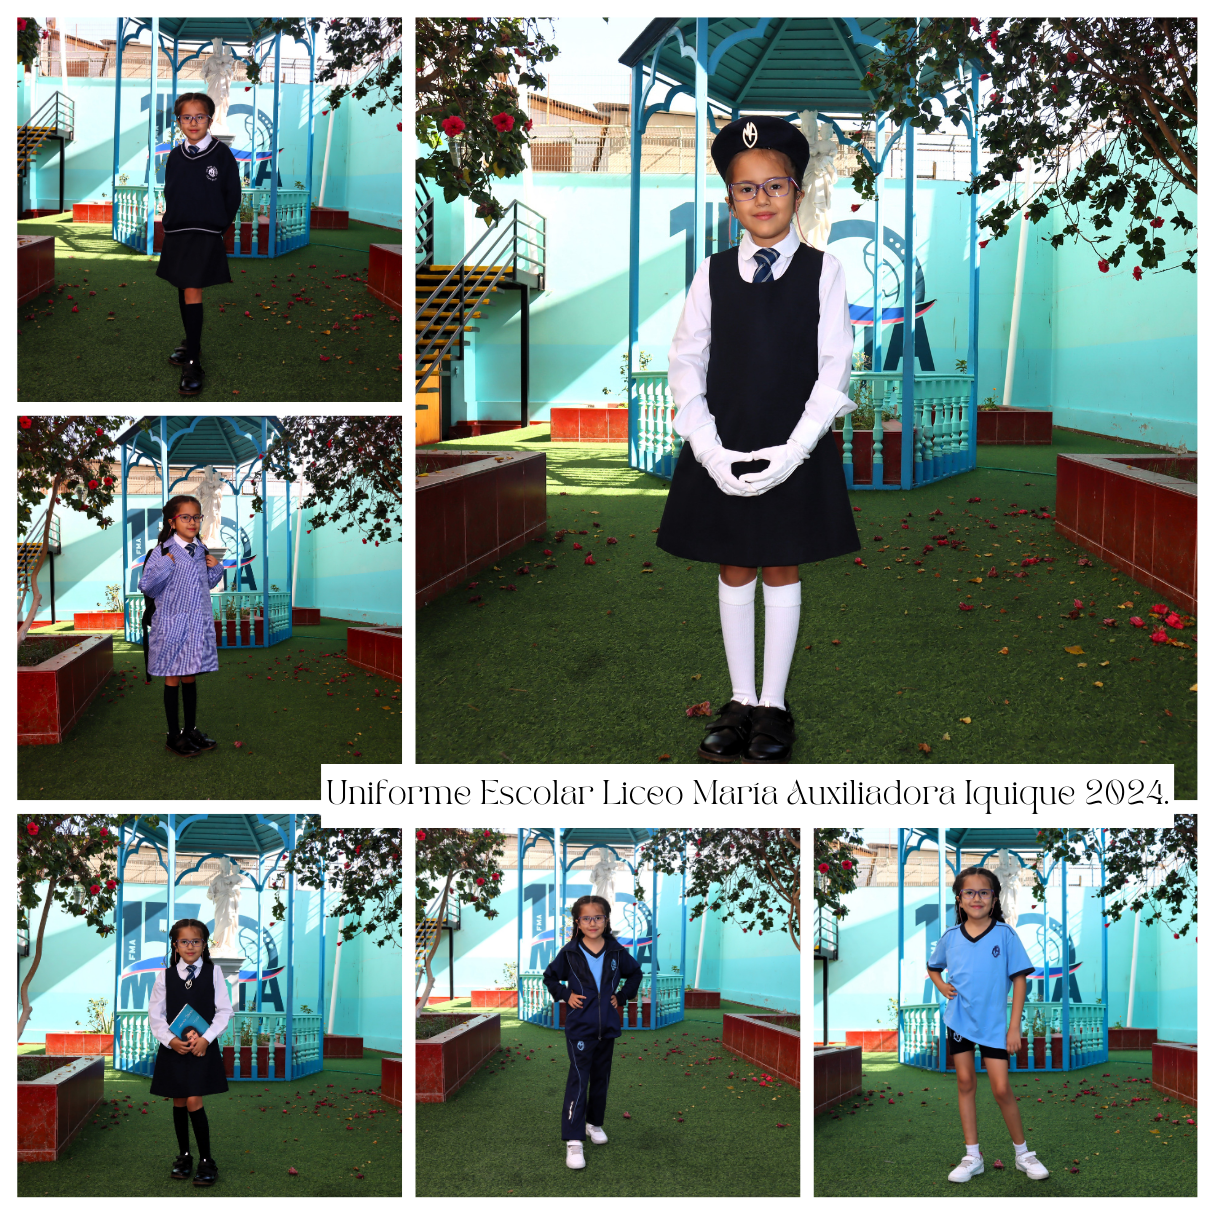 uniforme-escolar-lma-iquique-2024-1